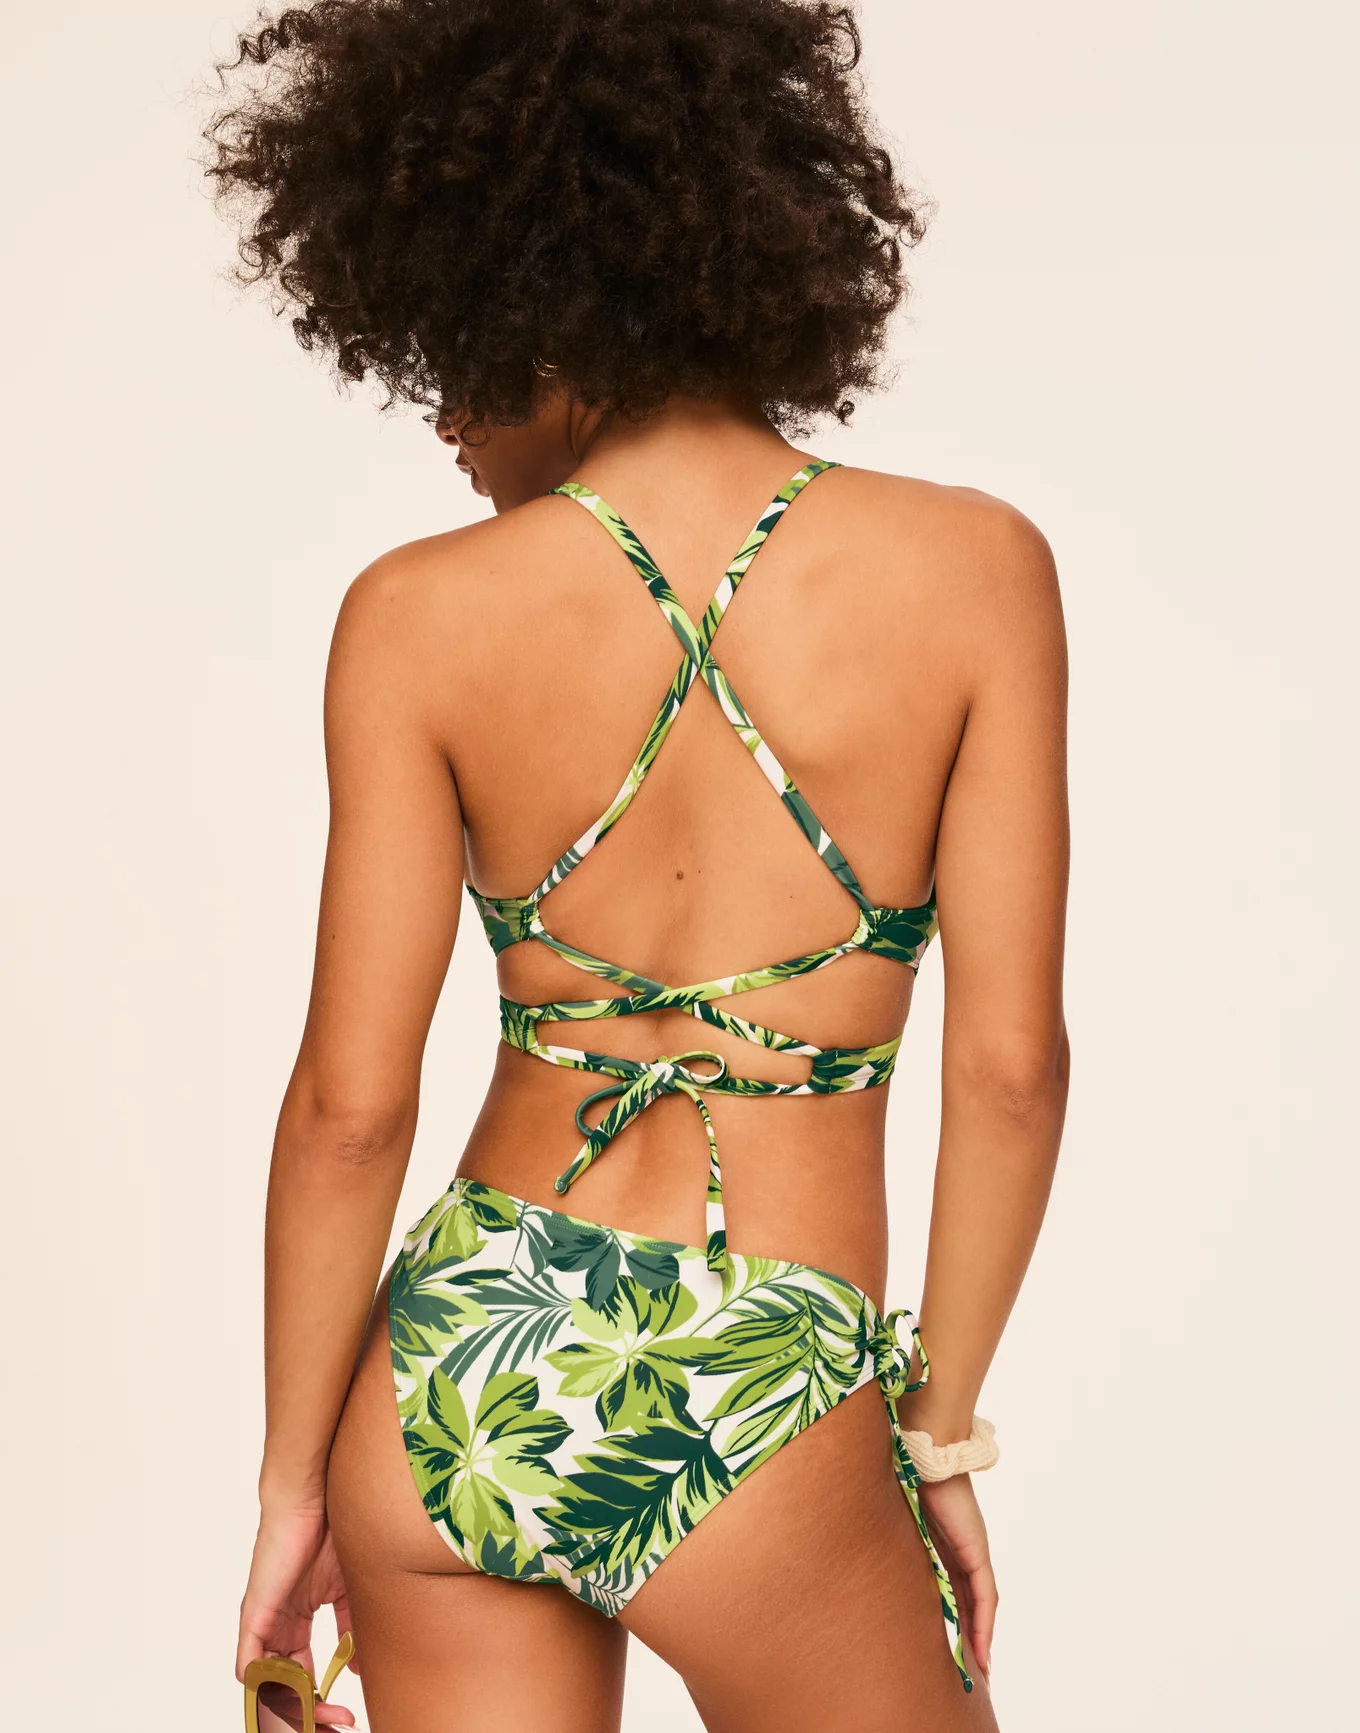 TROPICAL PARADISE “Reversible” Athletic Triangle Bikini Top